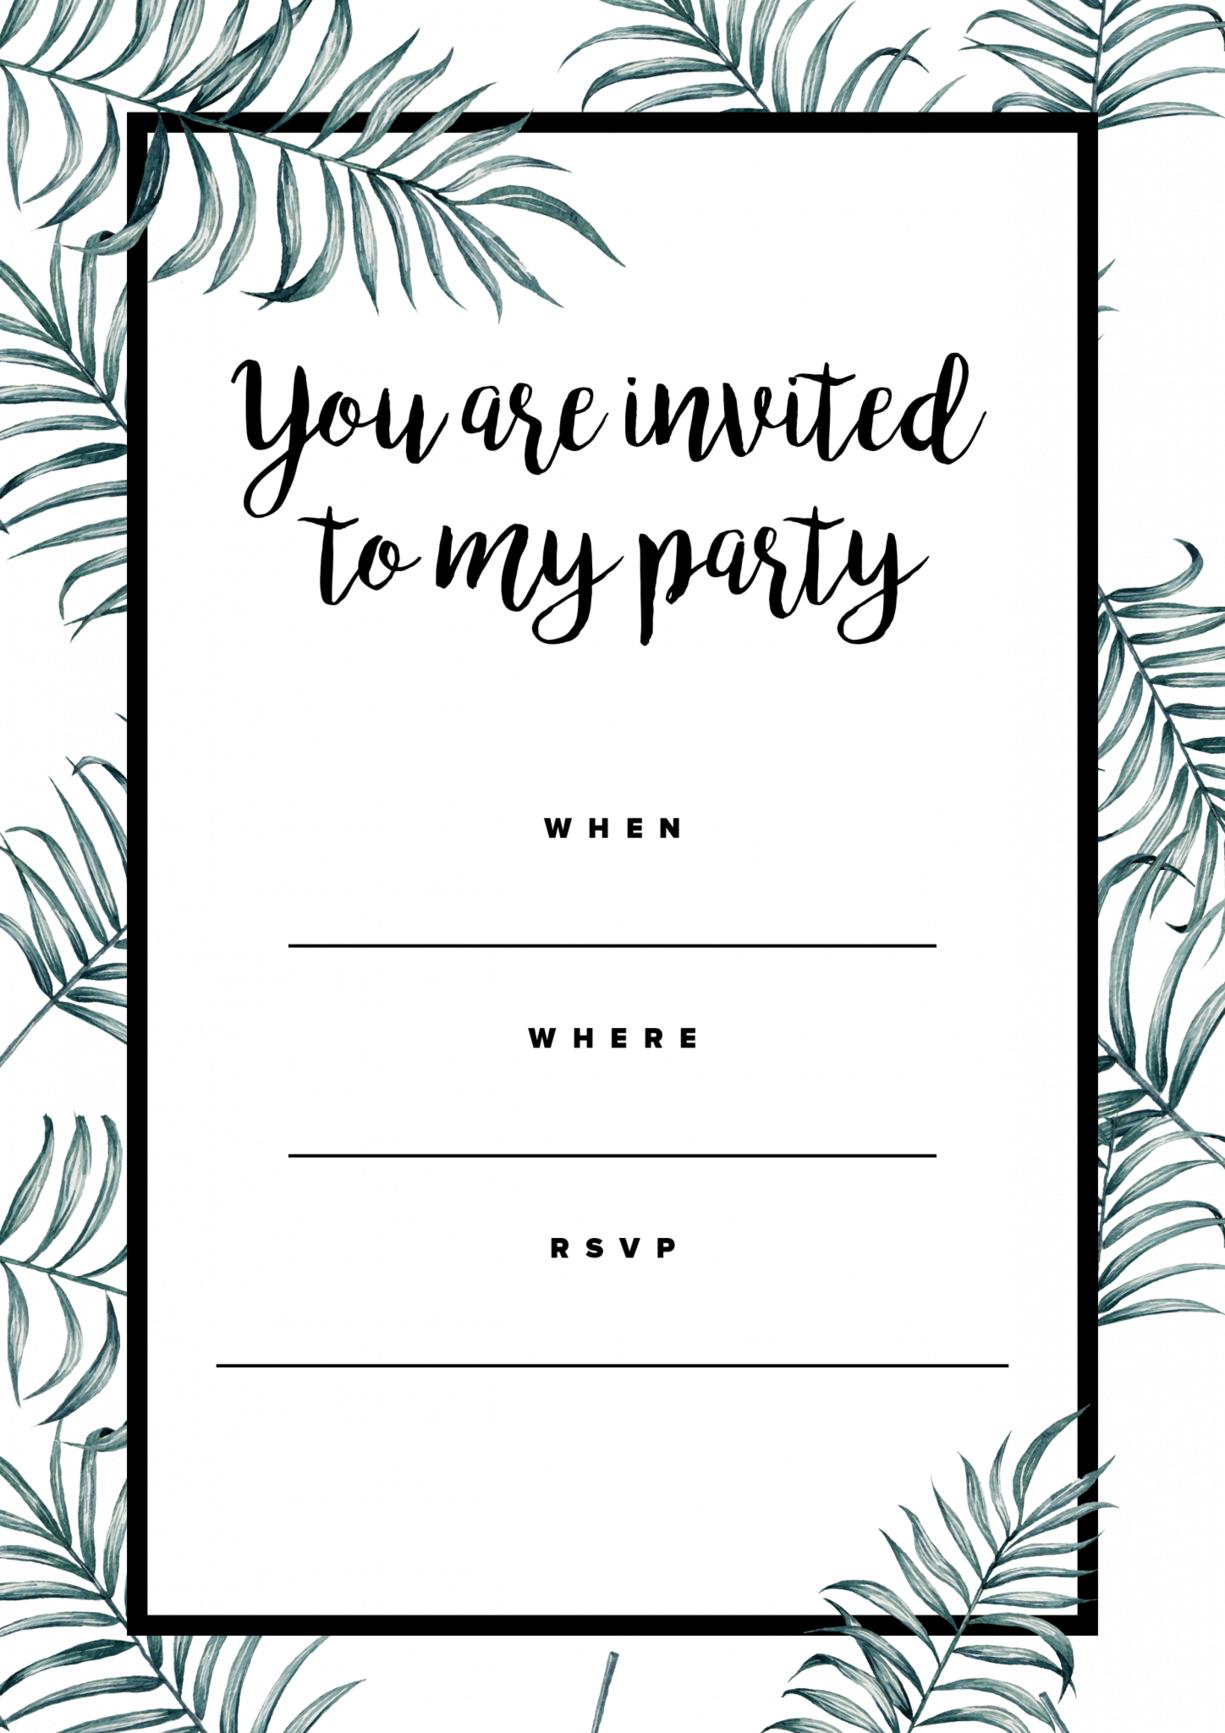 free-party-invitations-all-free-invitations